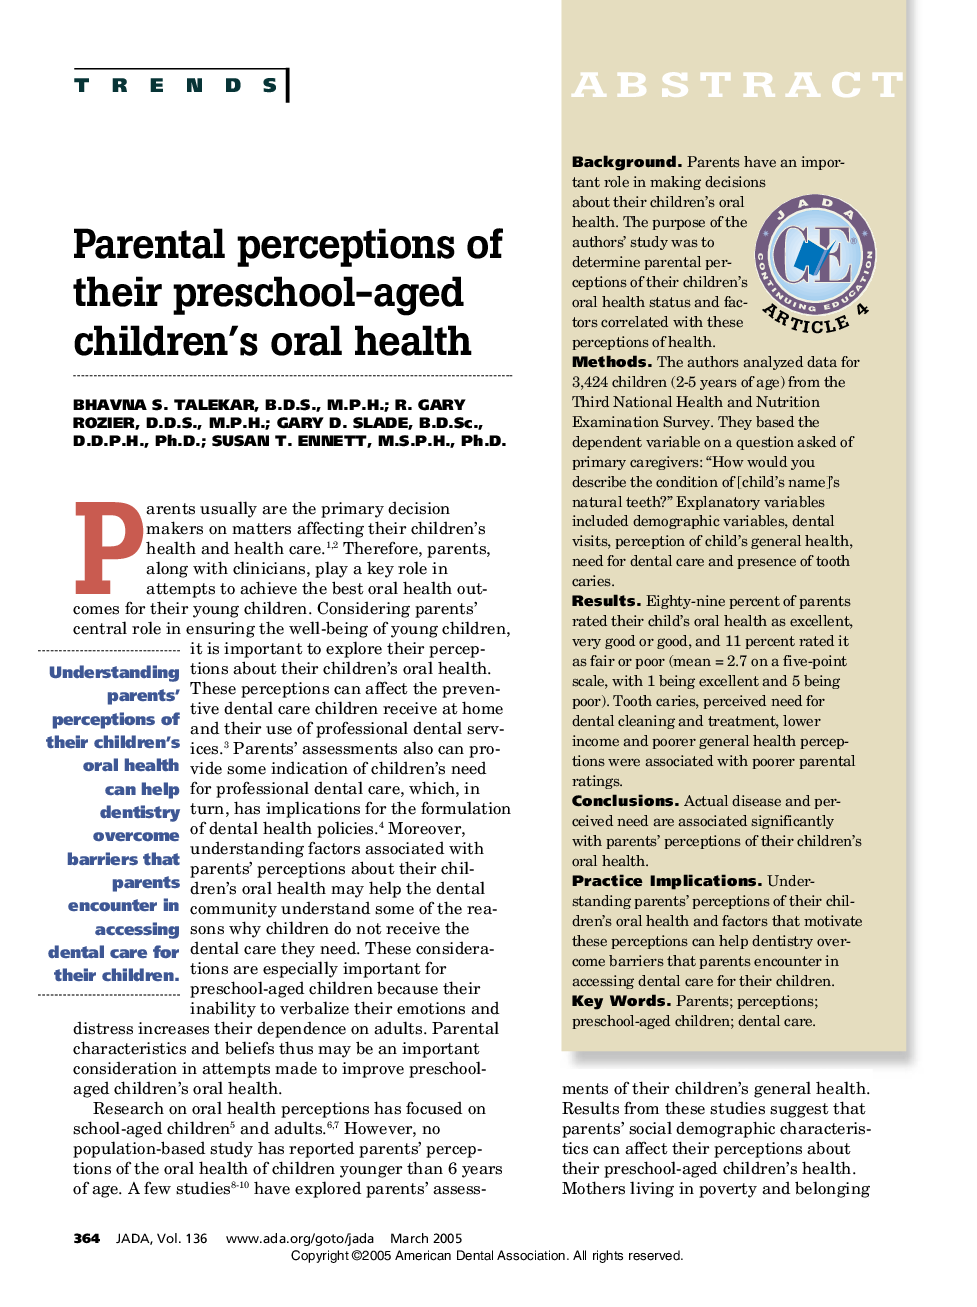 Parental perceptions of their preschool-aged children's oral health